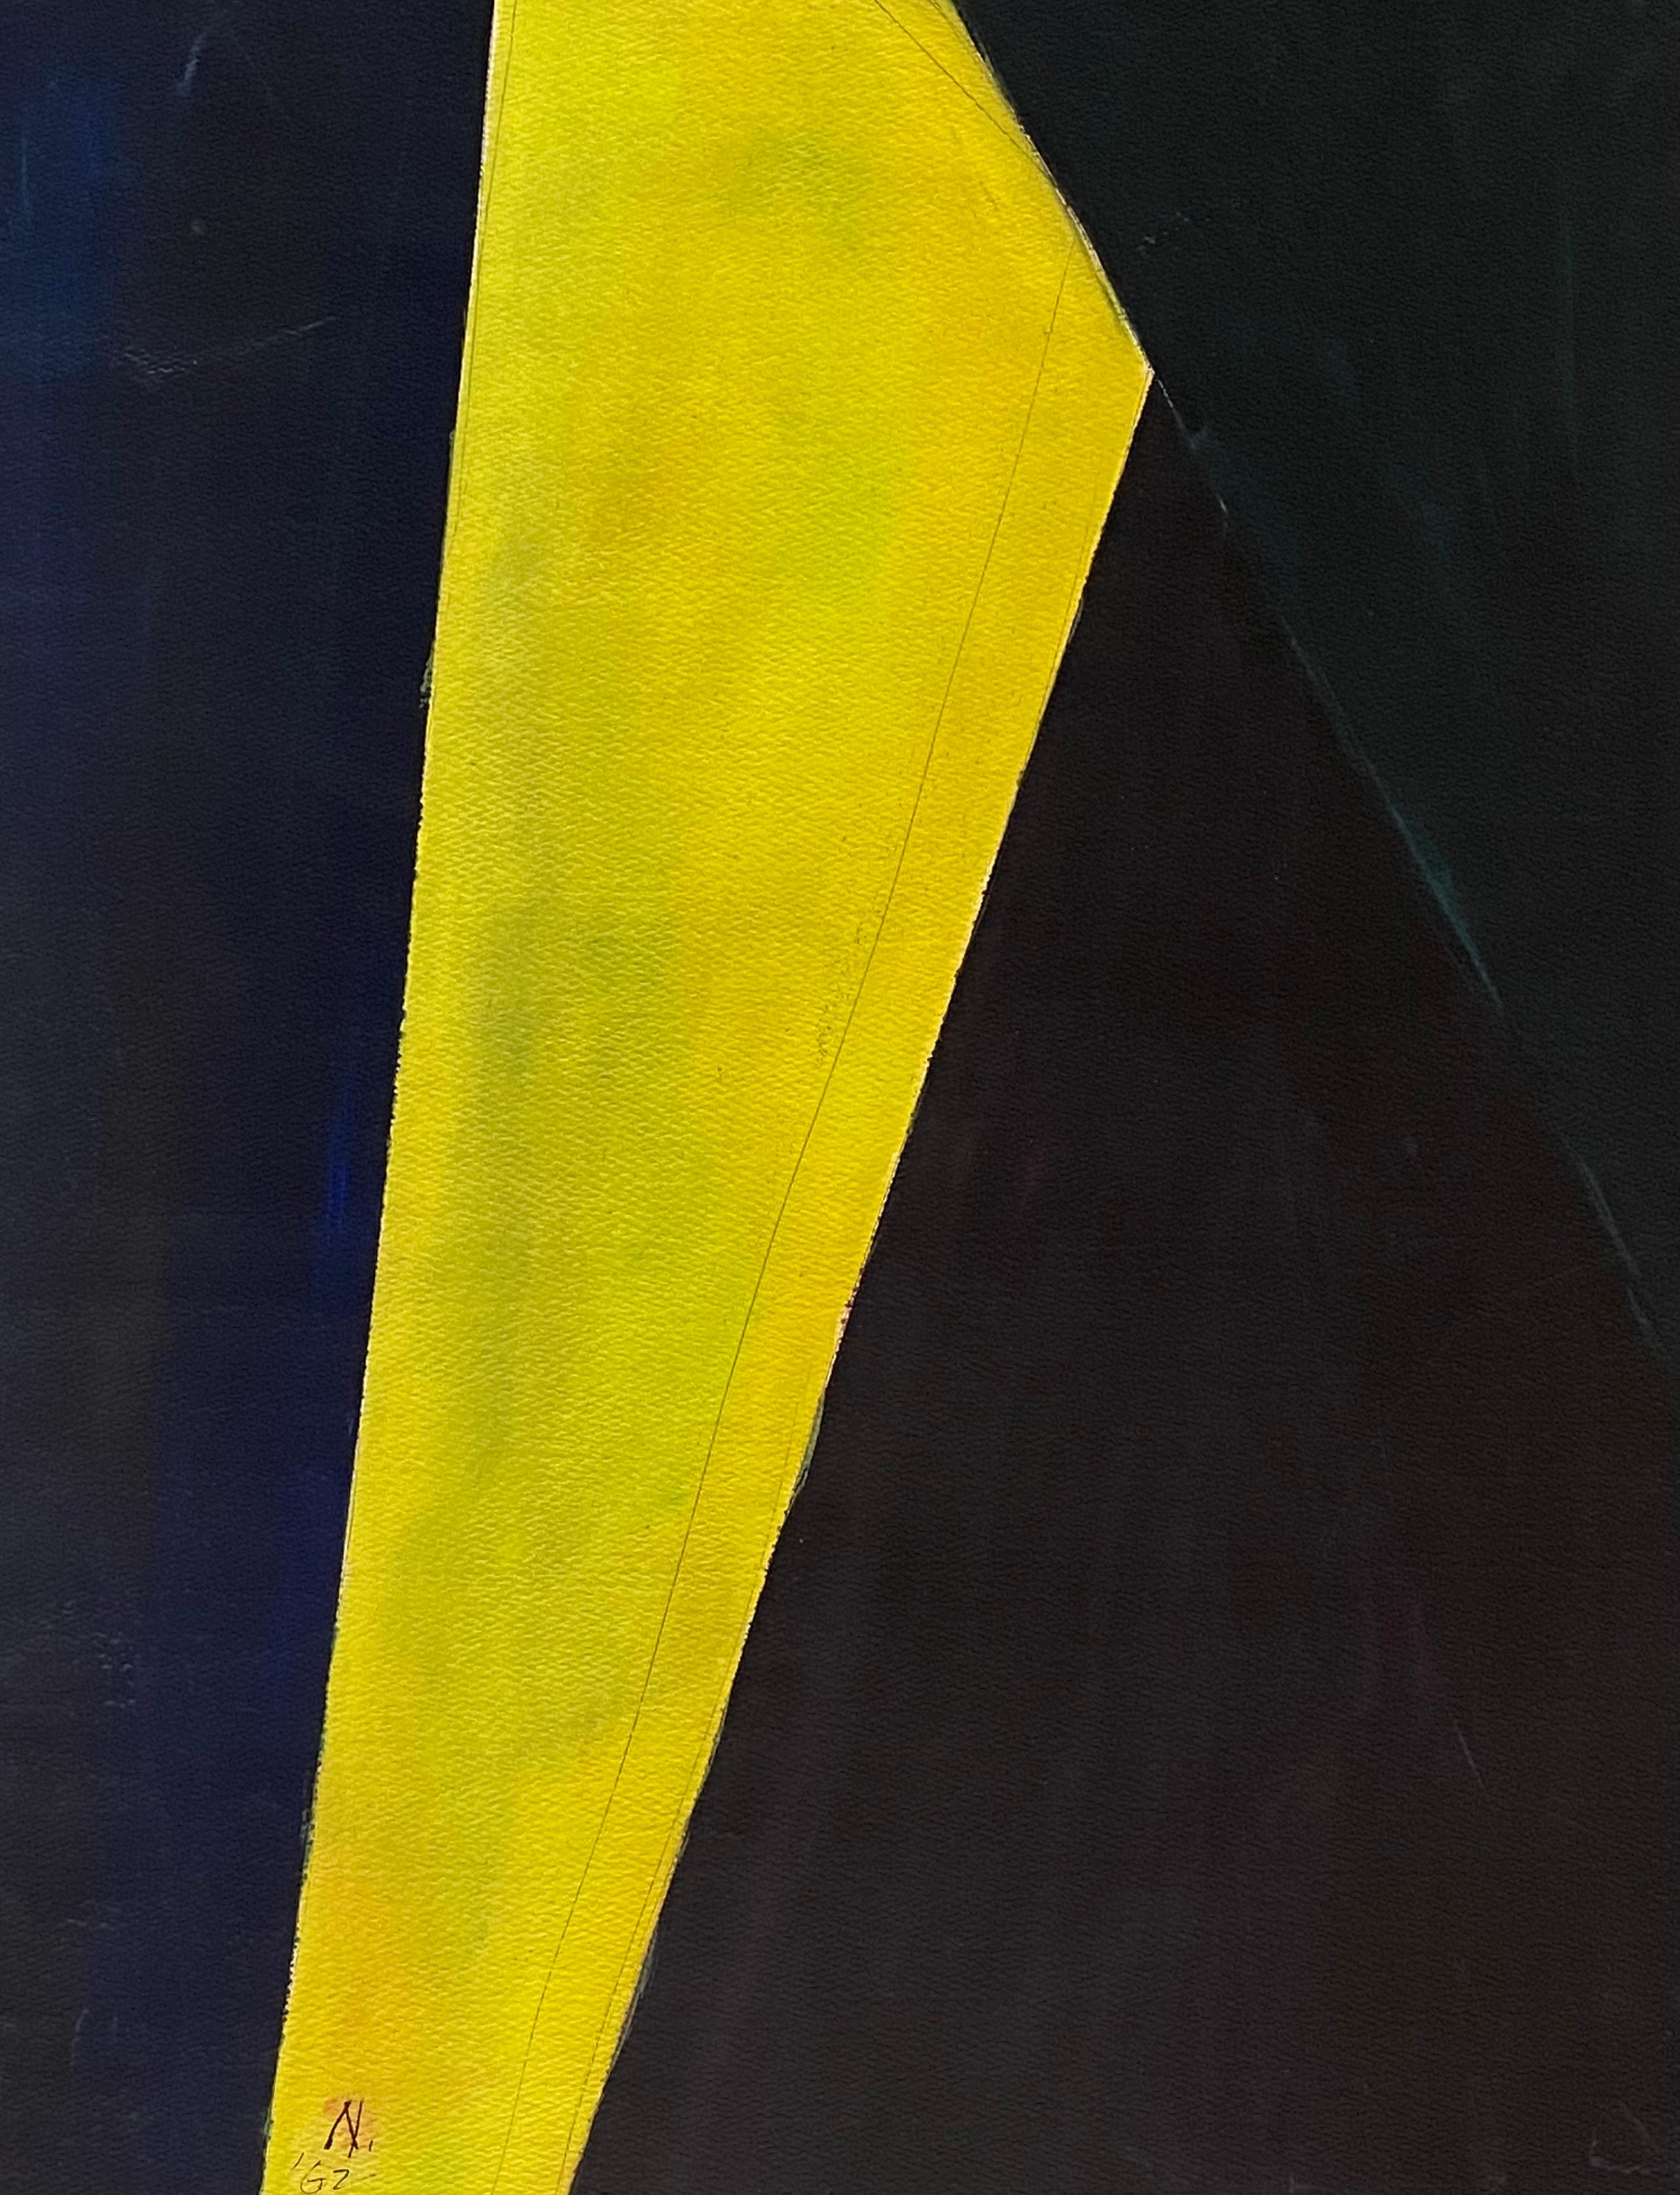 Abstrait en noir et jaune - Postmoderne Art par Lloyd Raymond Ney